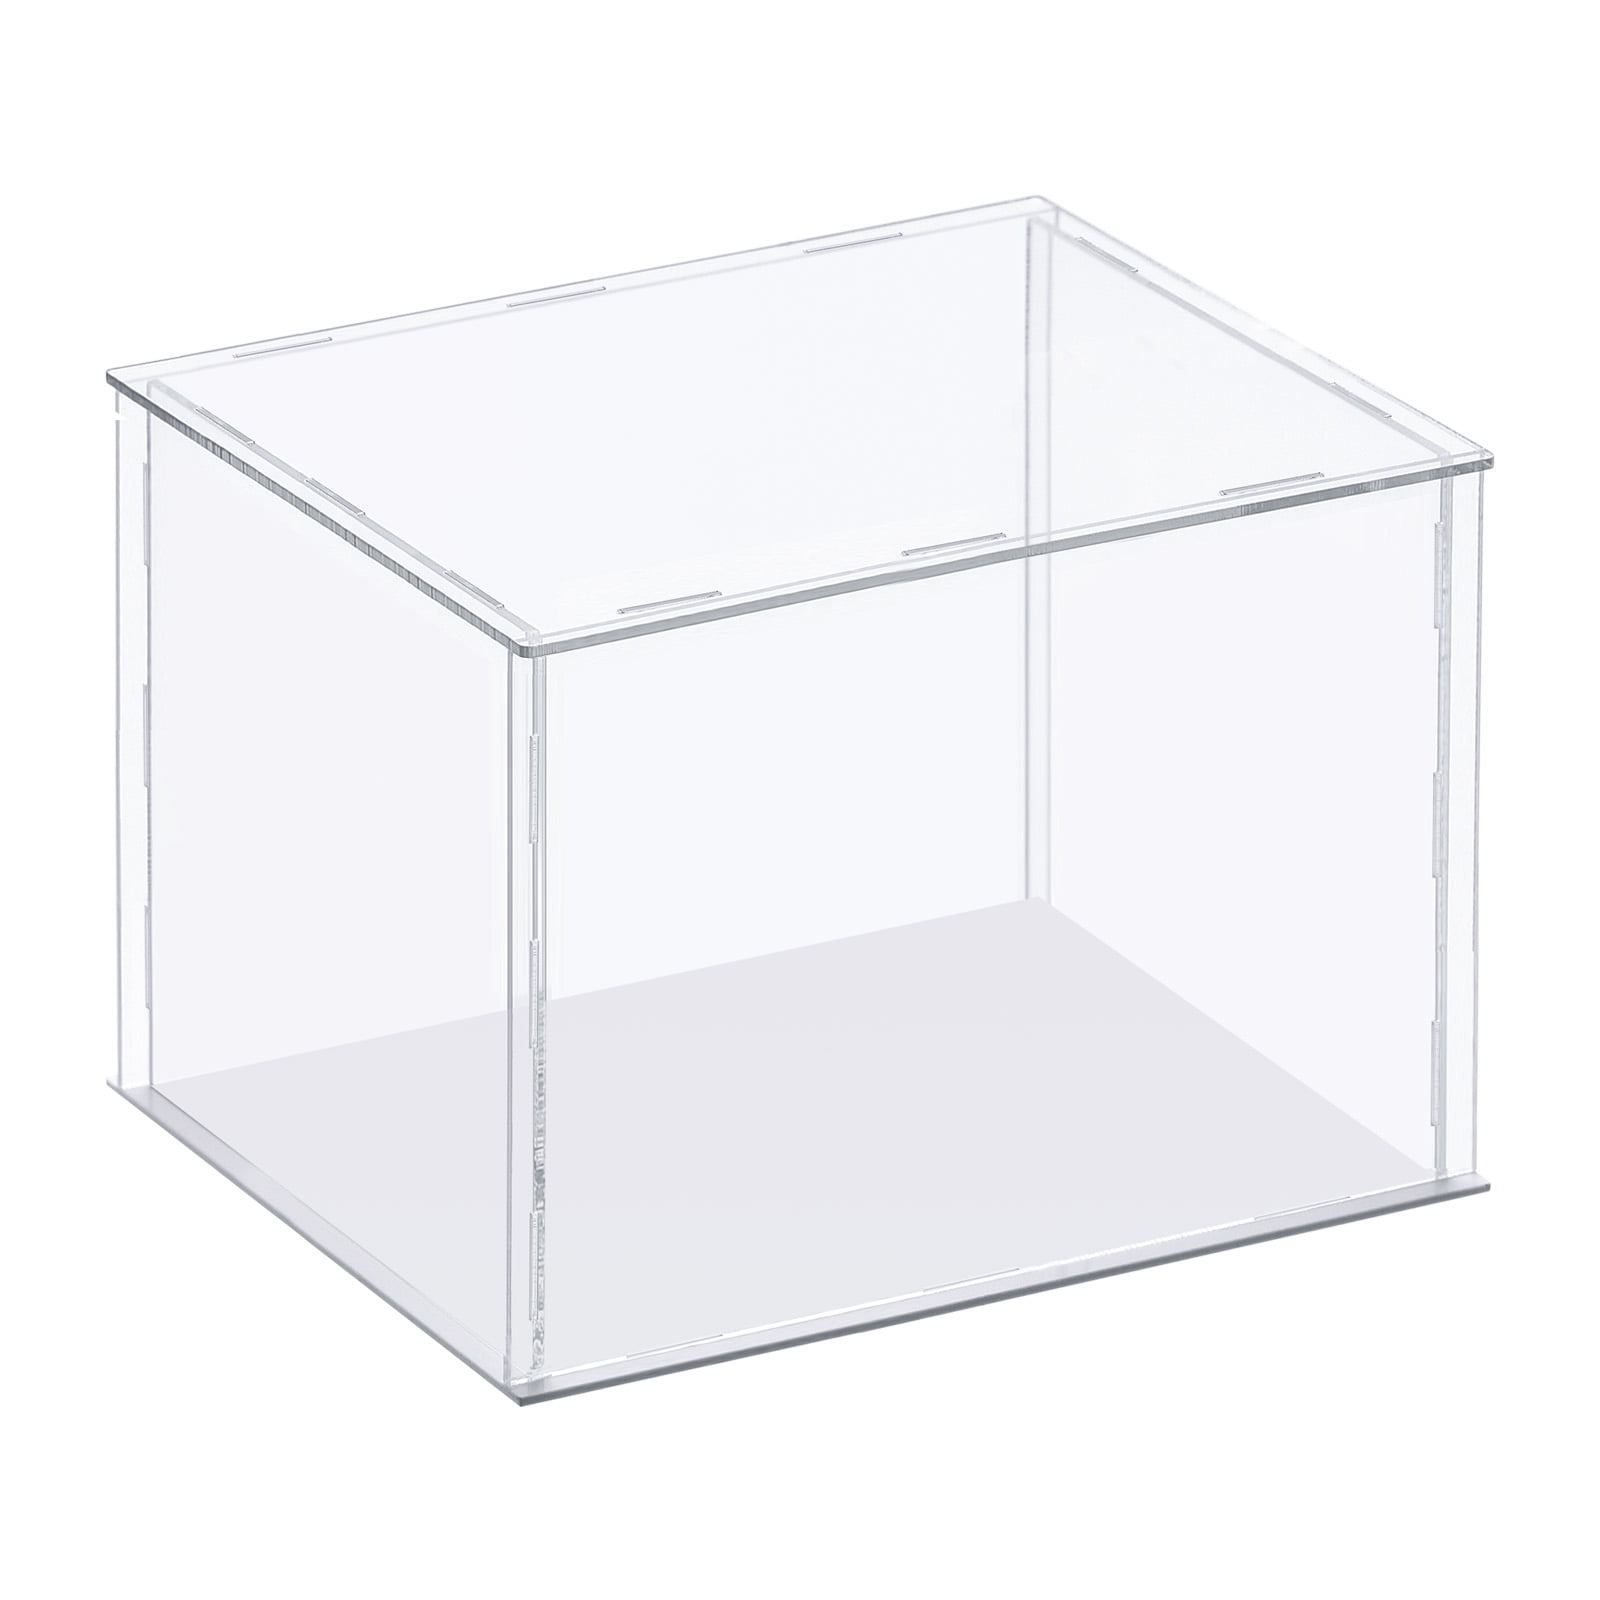 1Pc Thick 1-10mm High transparency Plexiglass Clear Acrylic Board, DIY  Handmade Material Plastic Display Box